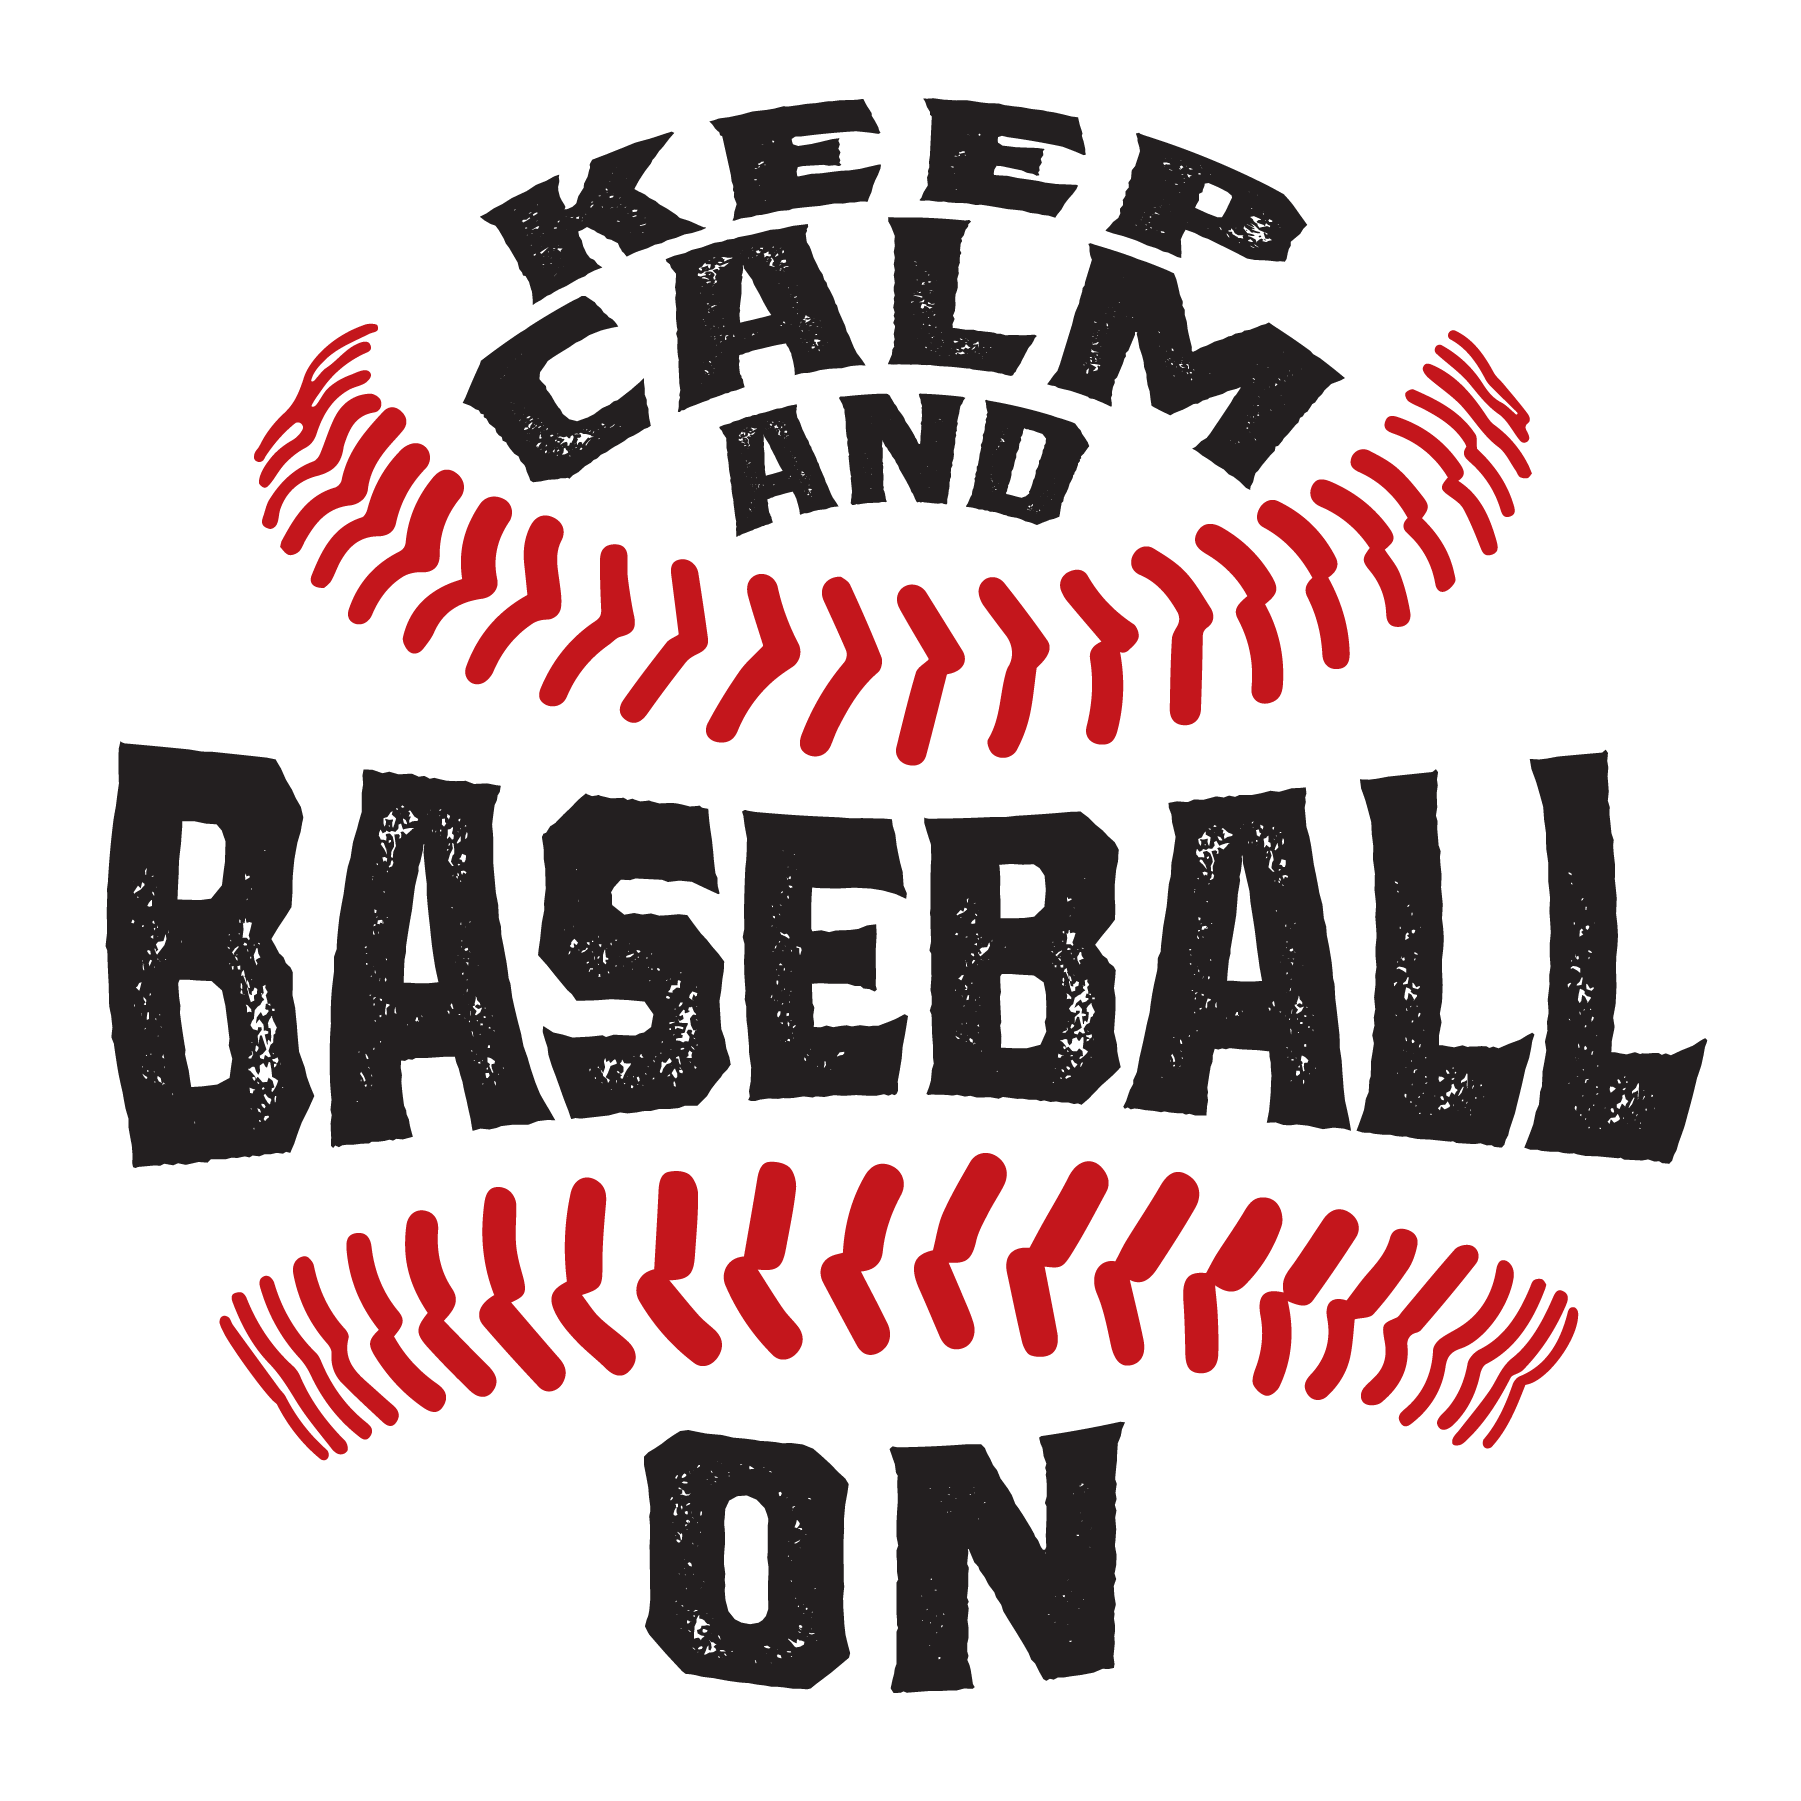 Keep Calm & Baseball On - Toy Tournament (KLTY 94.9 Christmas Wish) Logo